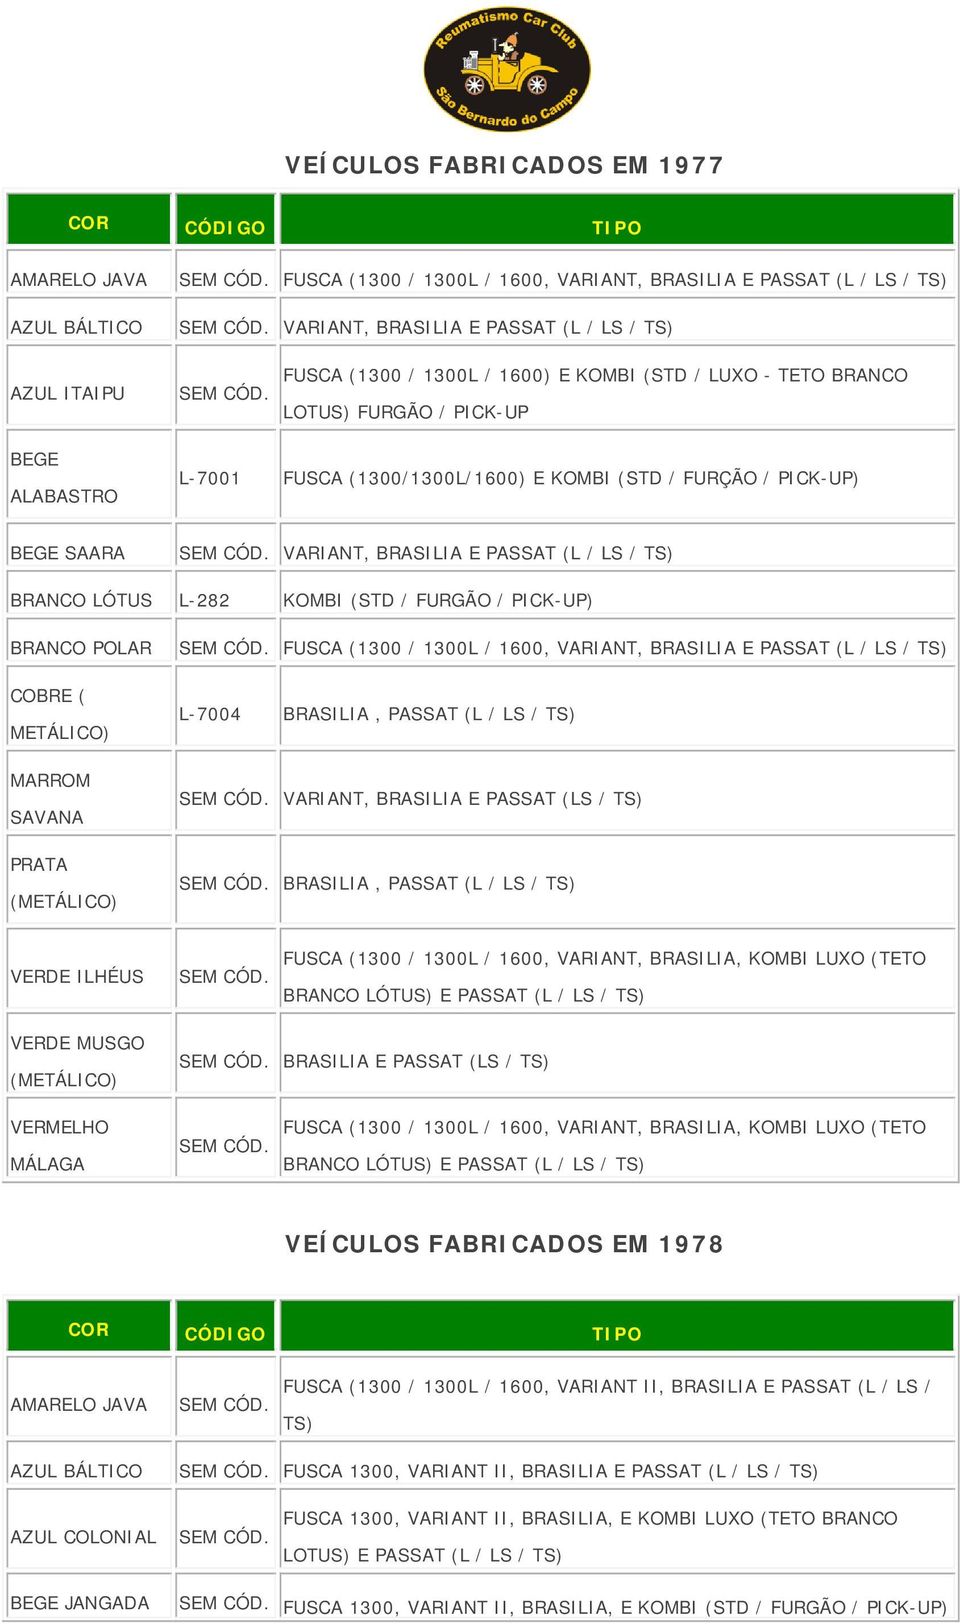 L-282 KOMBI (STD / FURGÃO / PICK-UP) BRANCO POLAR COBRE ( METÁLICO) MARROM SAVANA PRATA FUSCA (1300 / 1300L / 1600, VARIANT, BRASILIA E PASSAT (L / LS / TS) L-7004 BRASILIA, PASSAT (L / LS / TS)